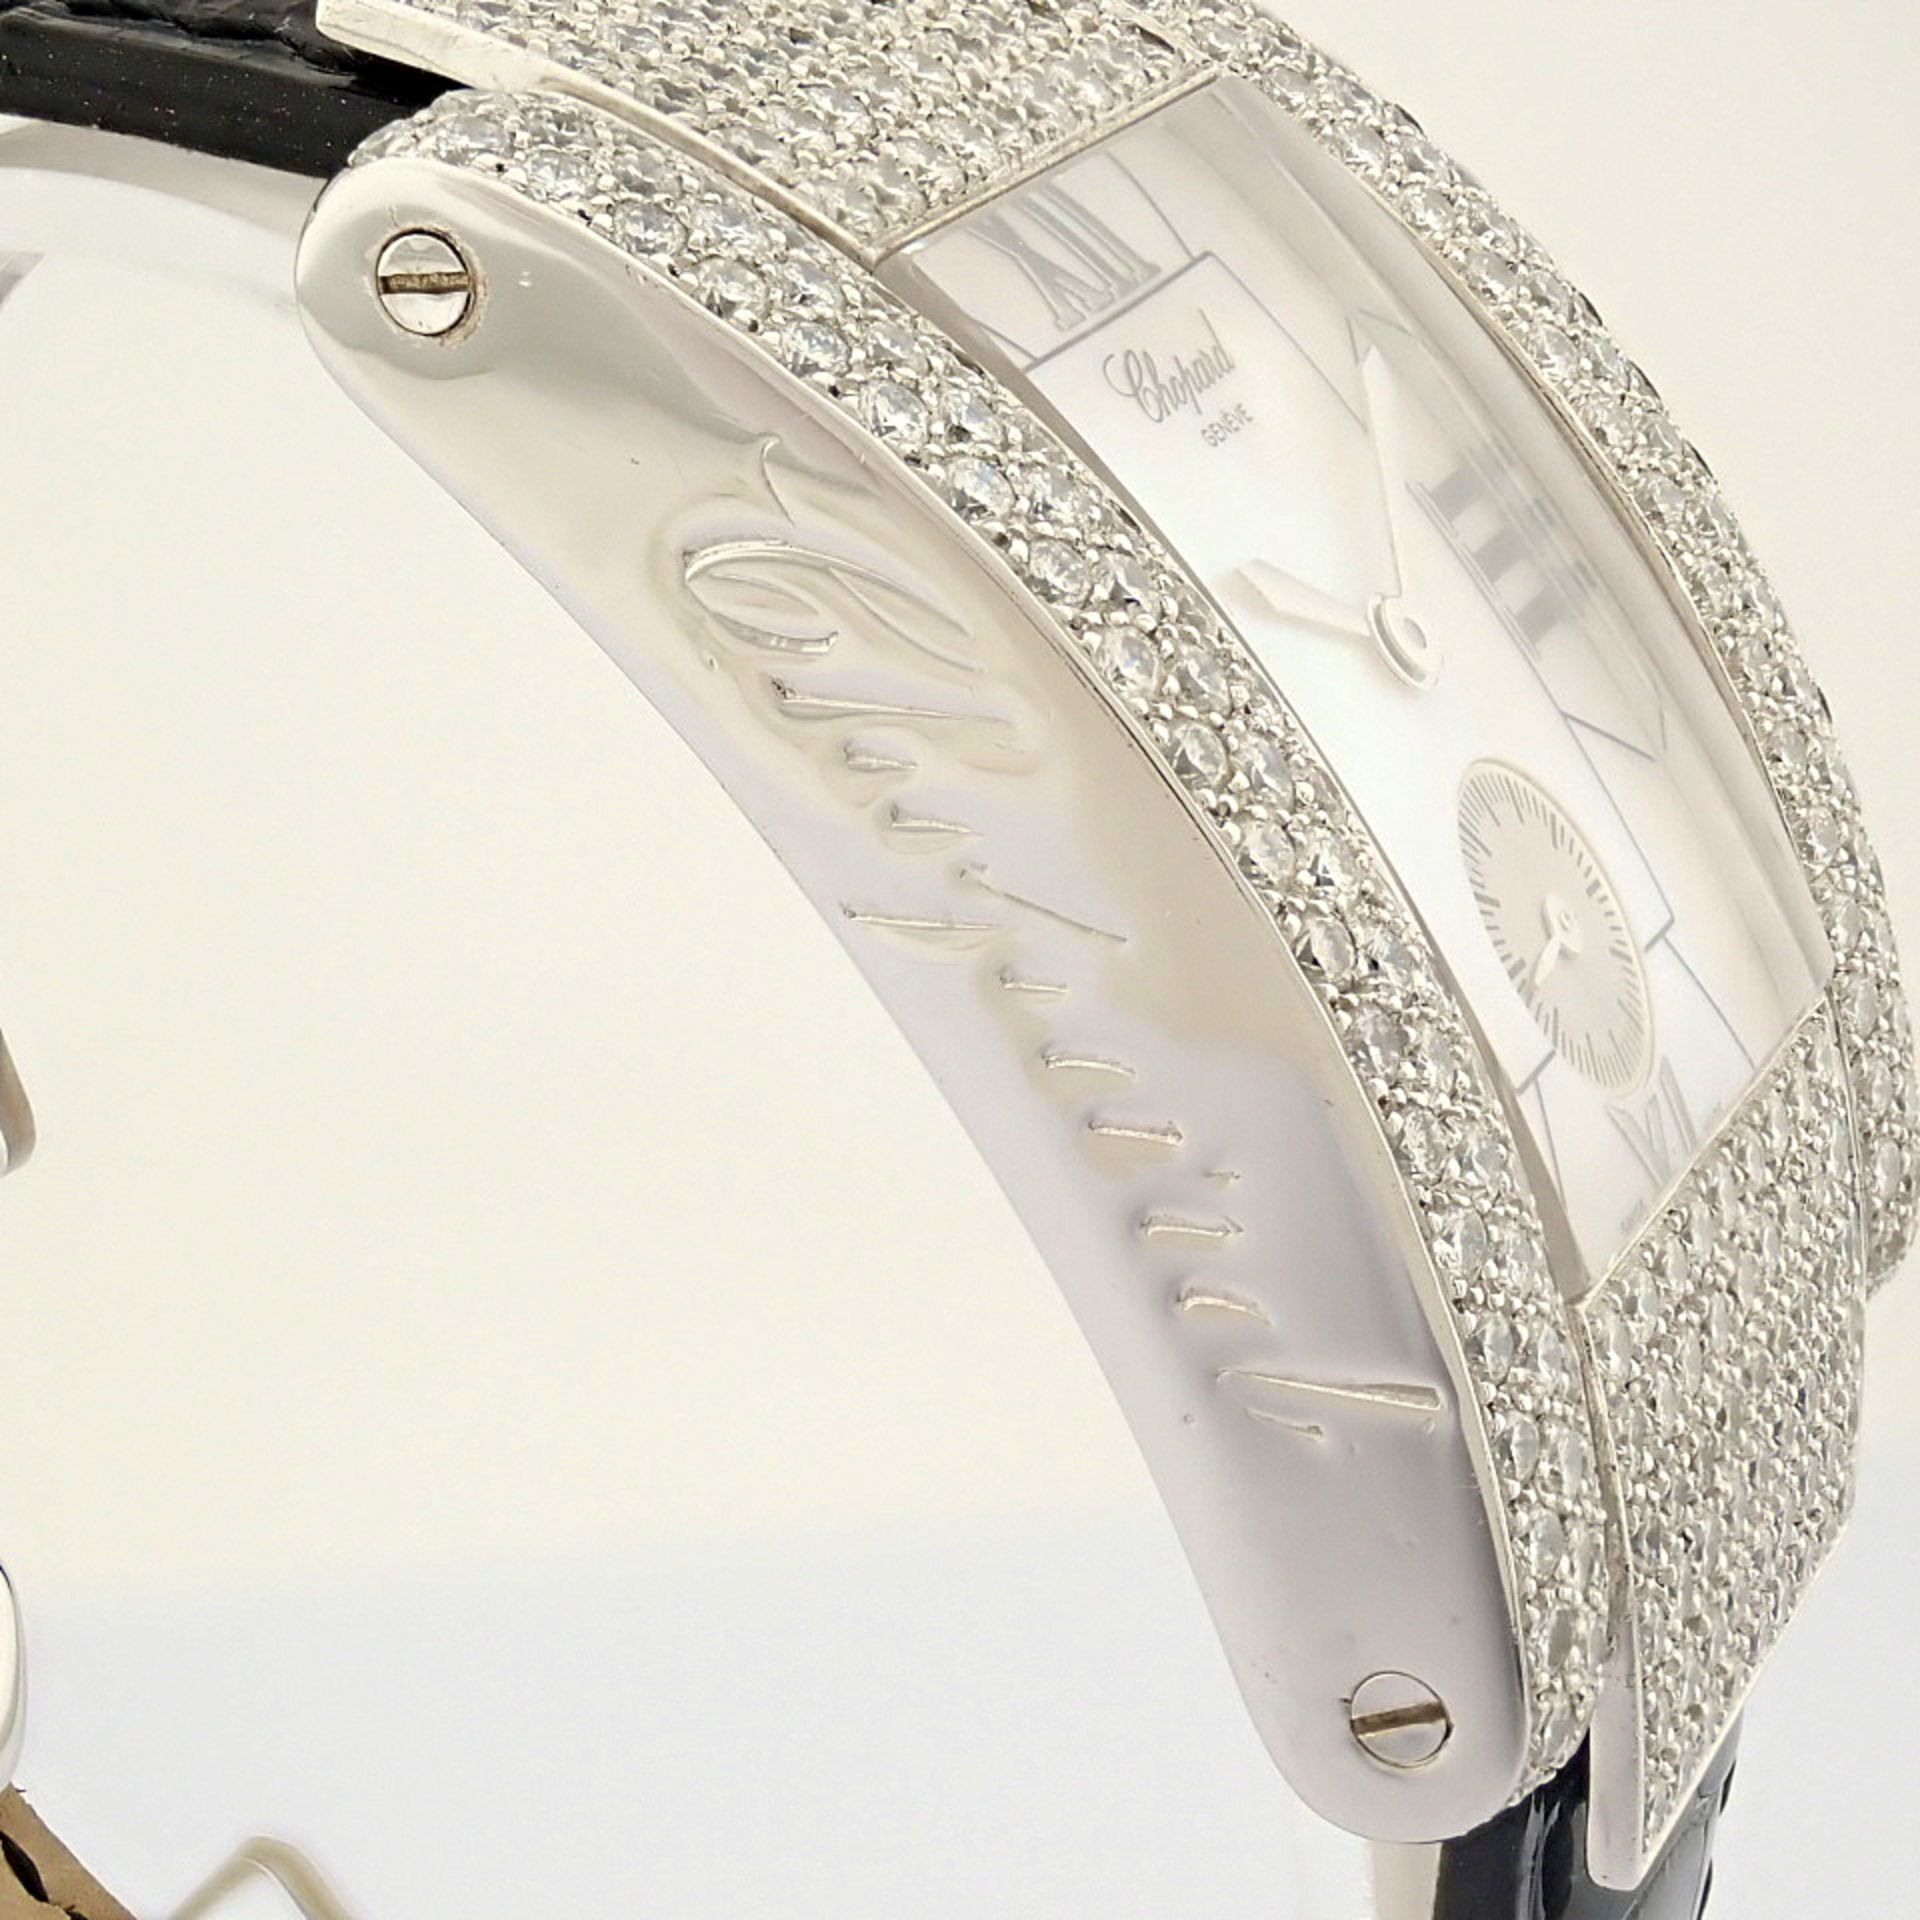 Chopard / La Strada - Lady's 18K White Gold Wrist Watch - Image 8 of 13